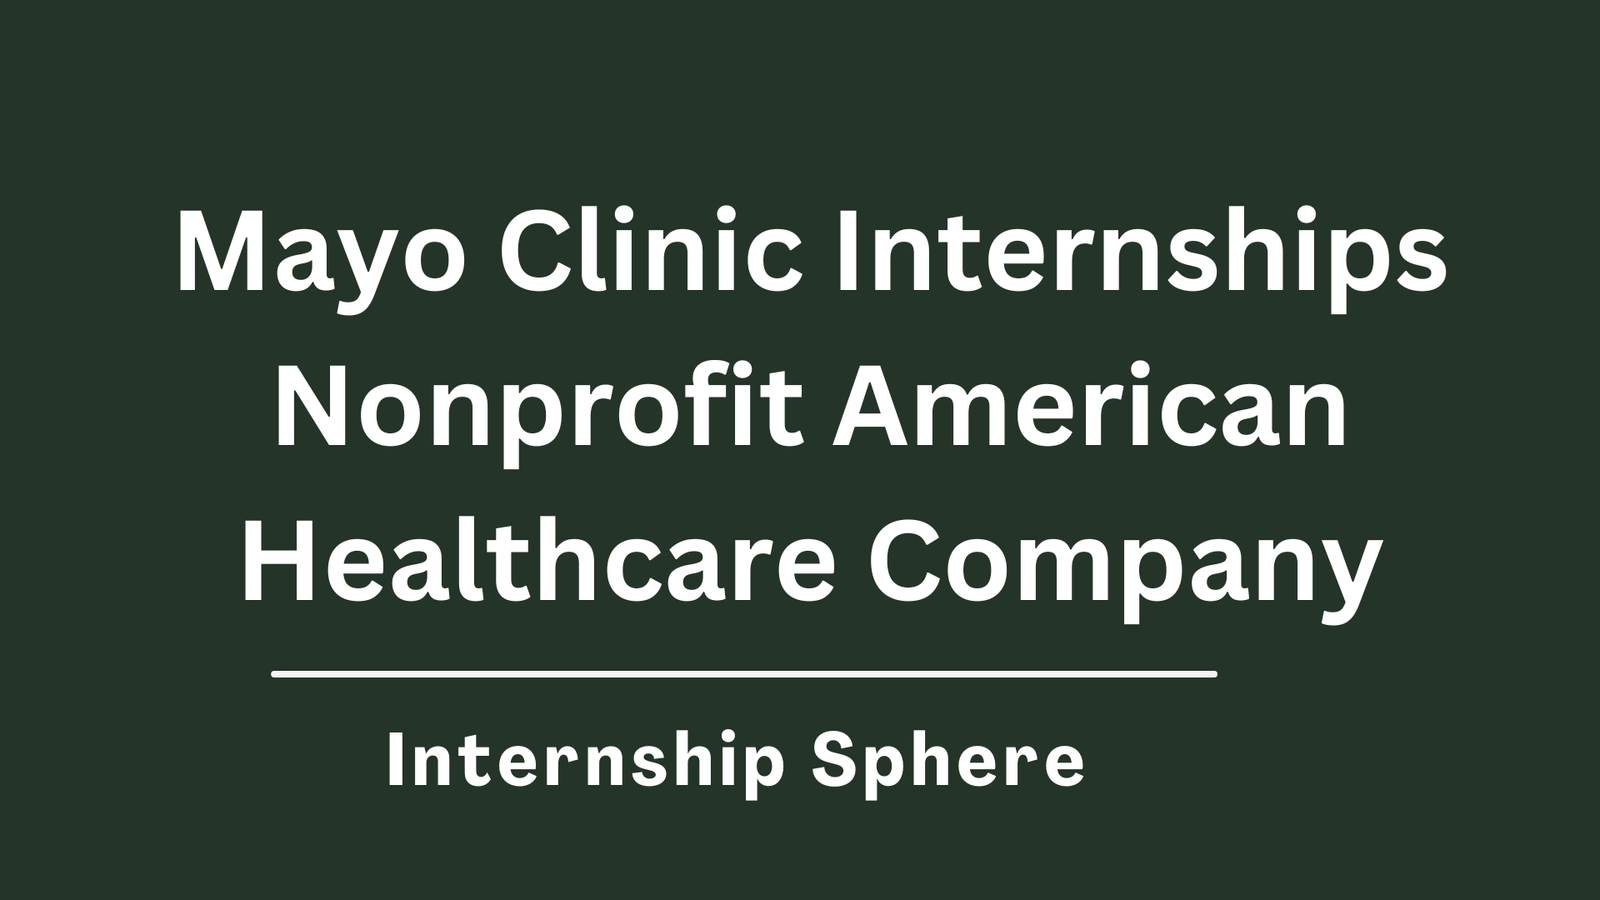 Mayo Clinic Internships